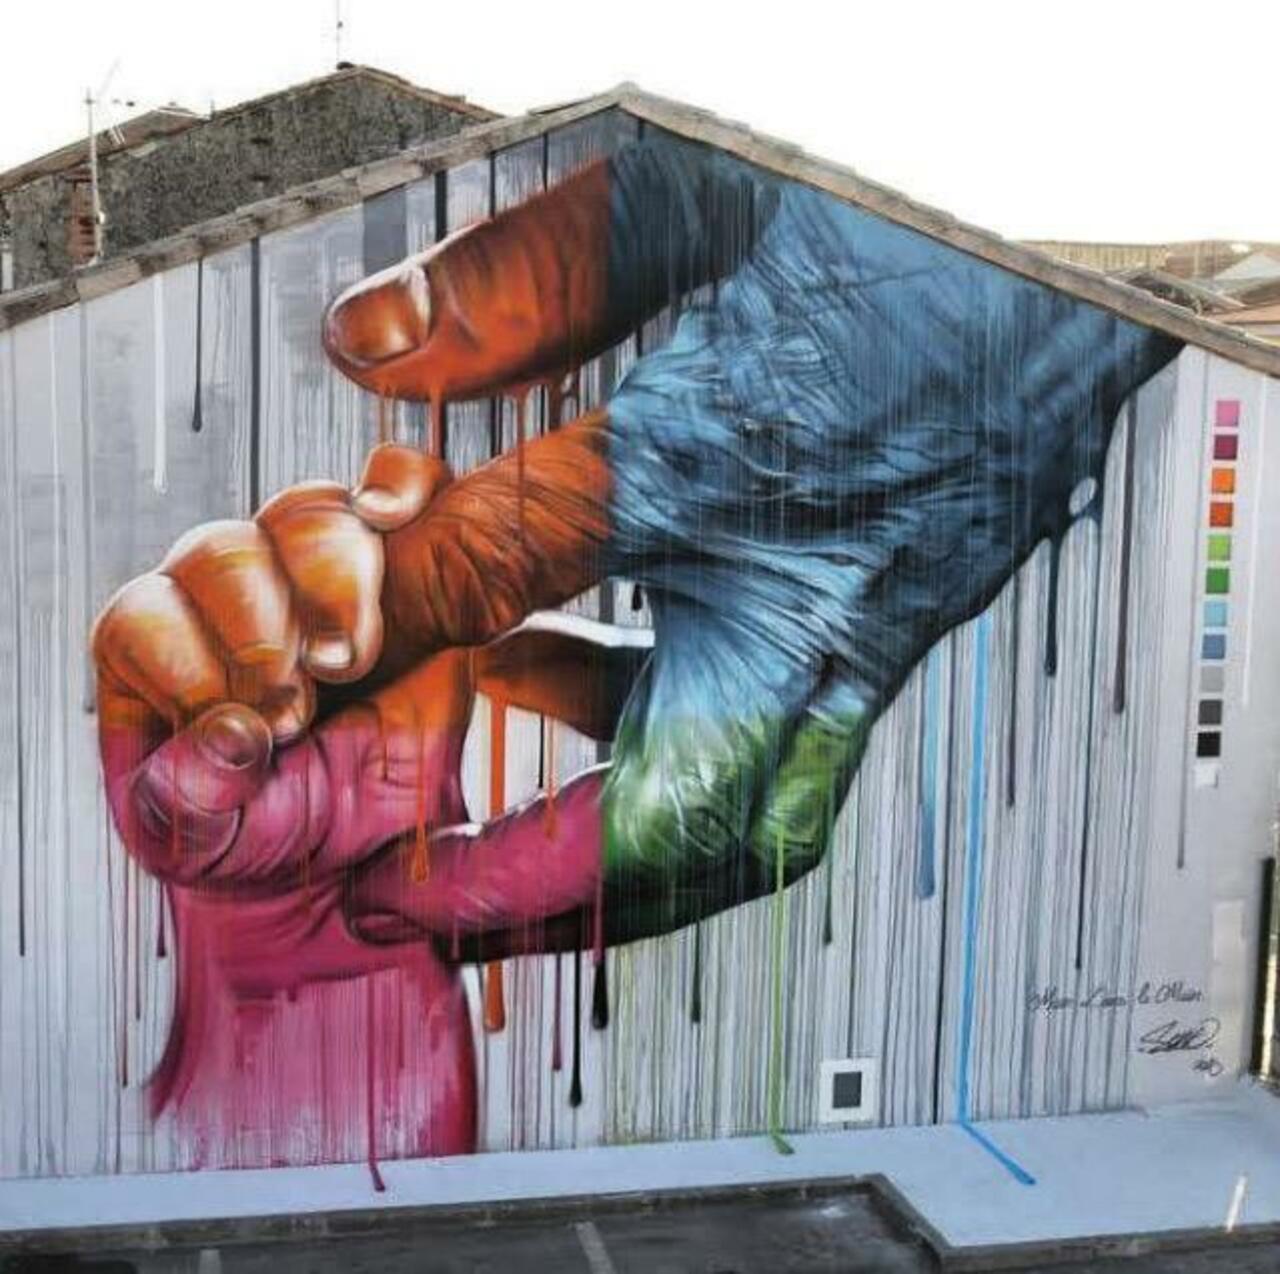 RT @JanPoPcHi: Seno Street Art 

#art #graffiti #mural #streetart http://t.co/eh8KNEpjEr